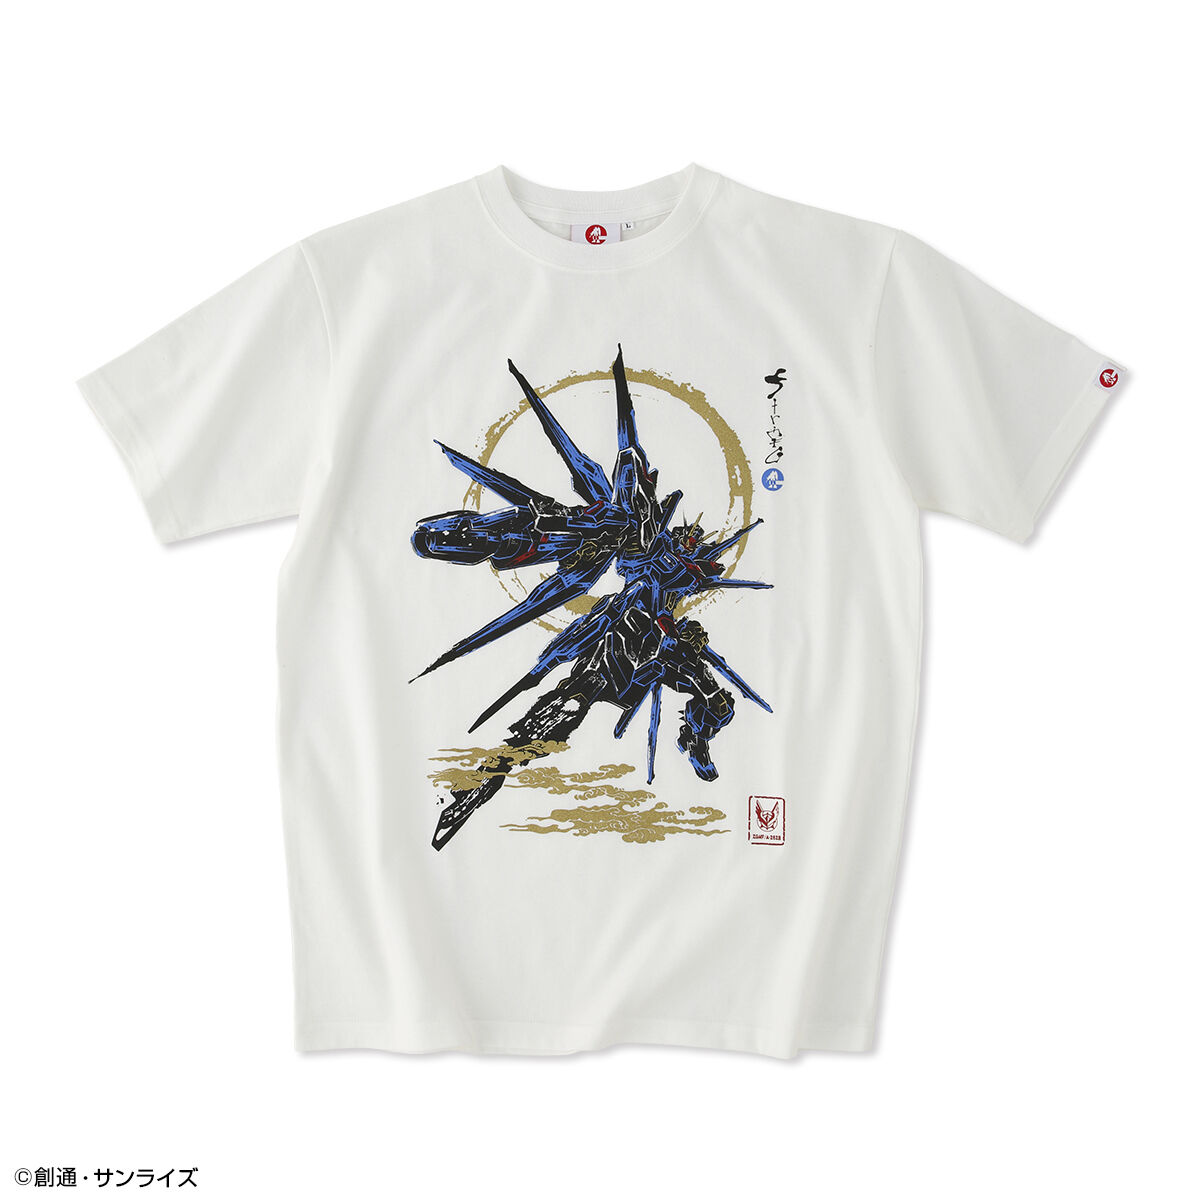 STRICT-G JAPAN『機動戦士SEED FREEDOM』Tシャツ ストライクフリーダム